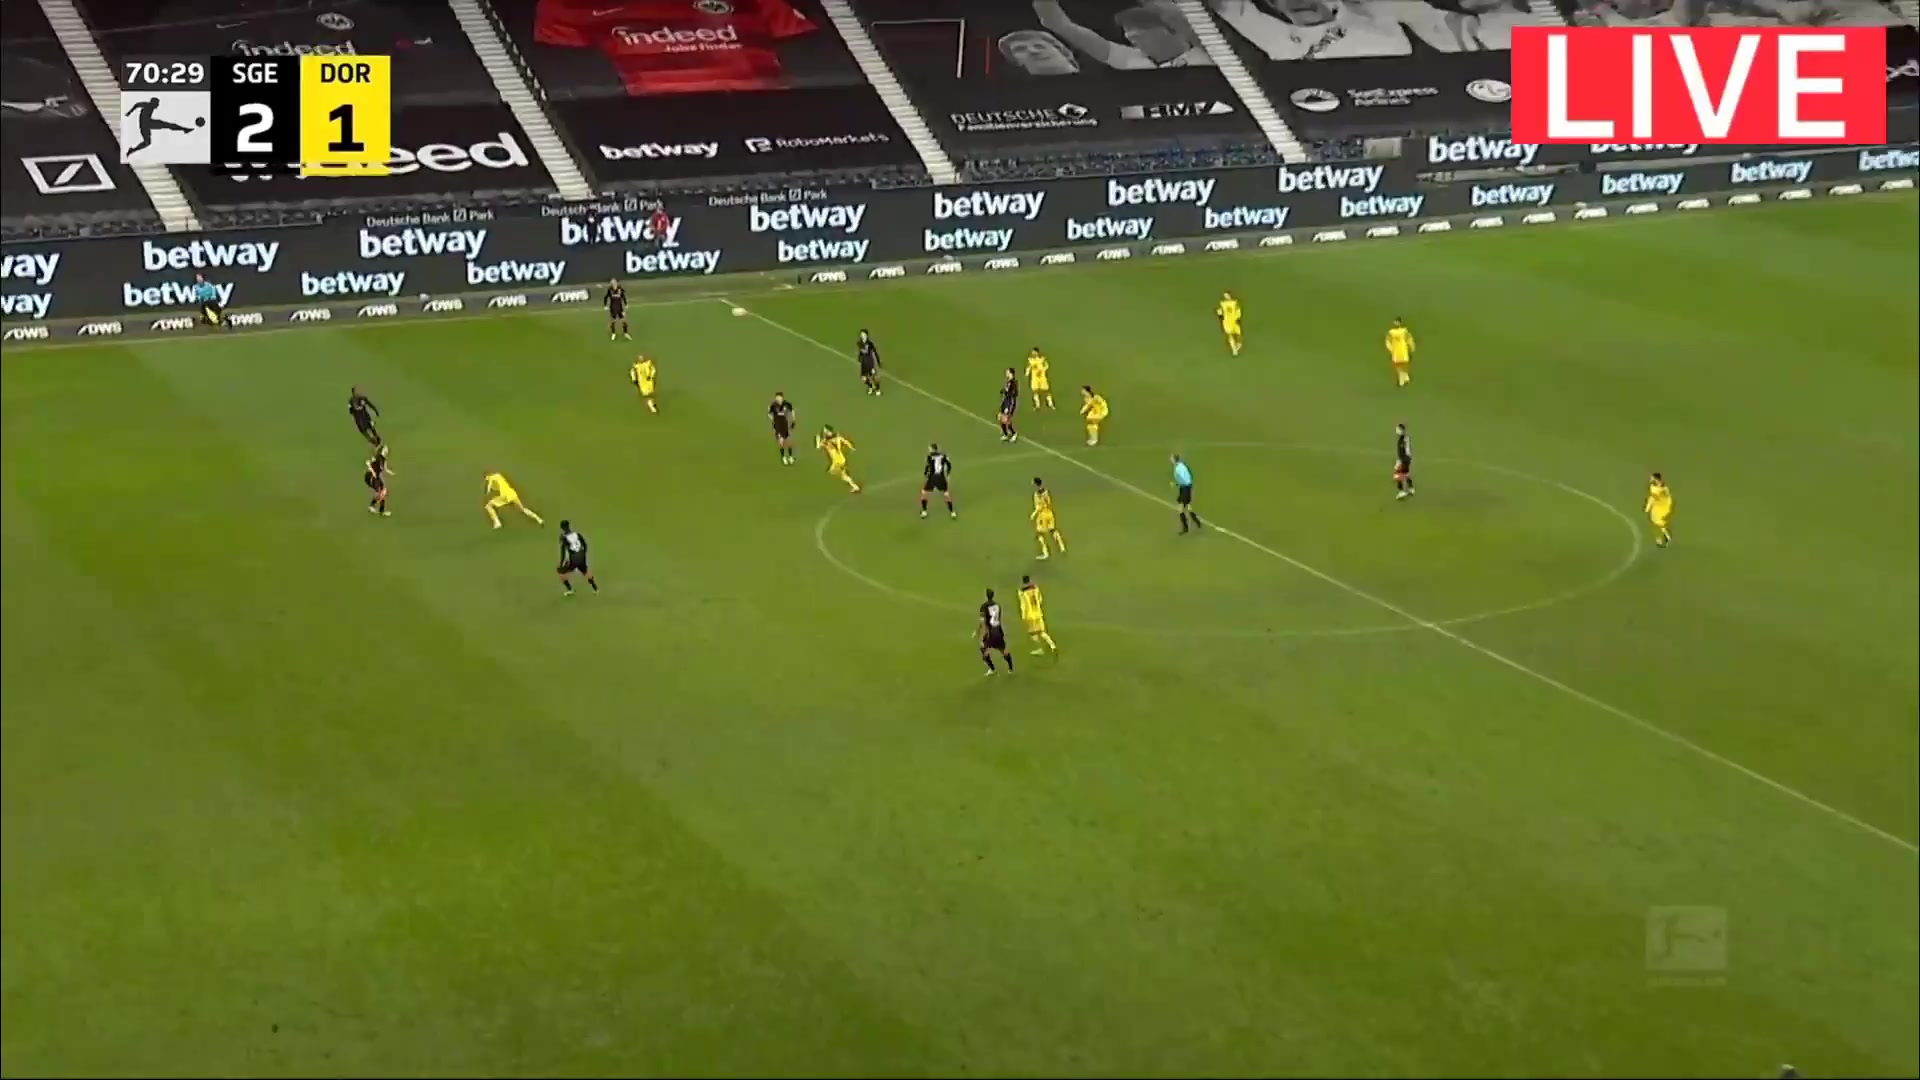 Bundesliga Eintracht Frankfurt Vs Borussia Dortmund Thorgan Hazard Goal in 70 min, Score 2:1